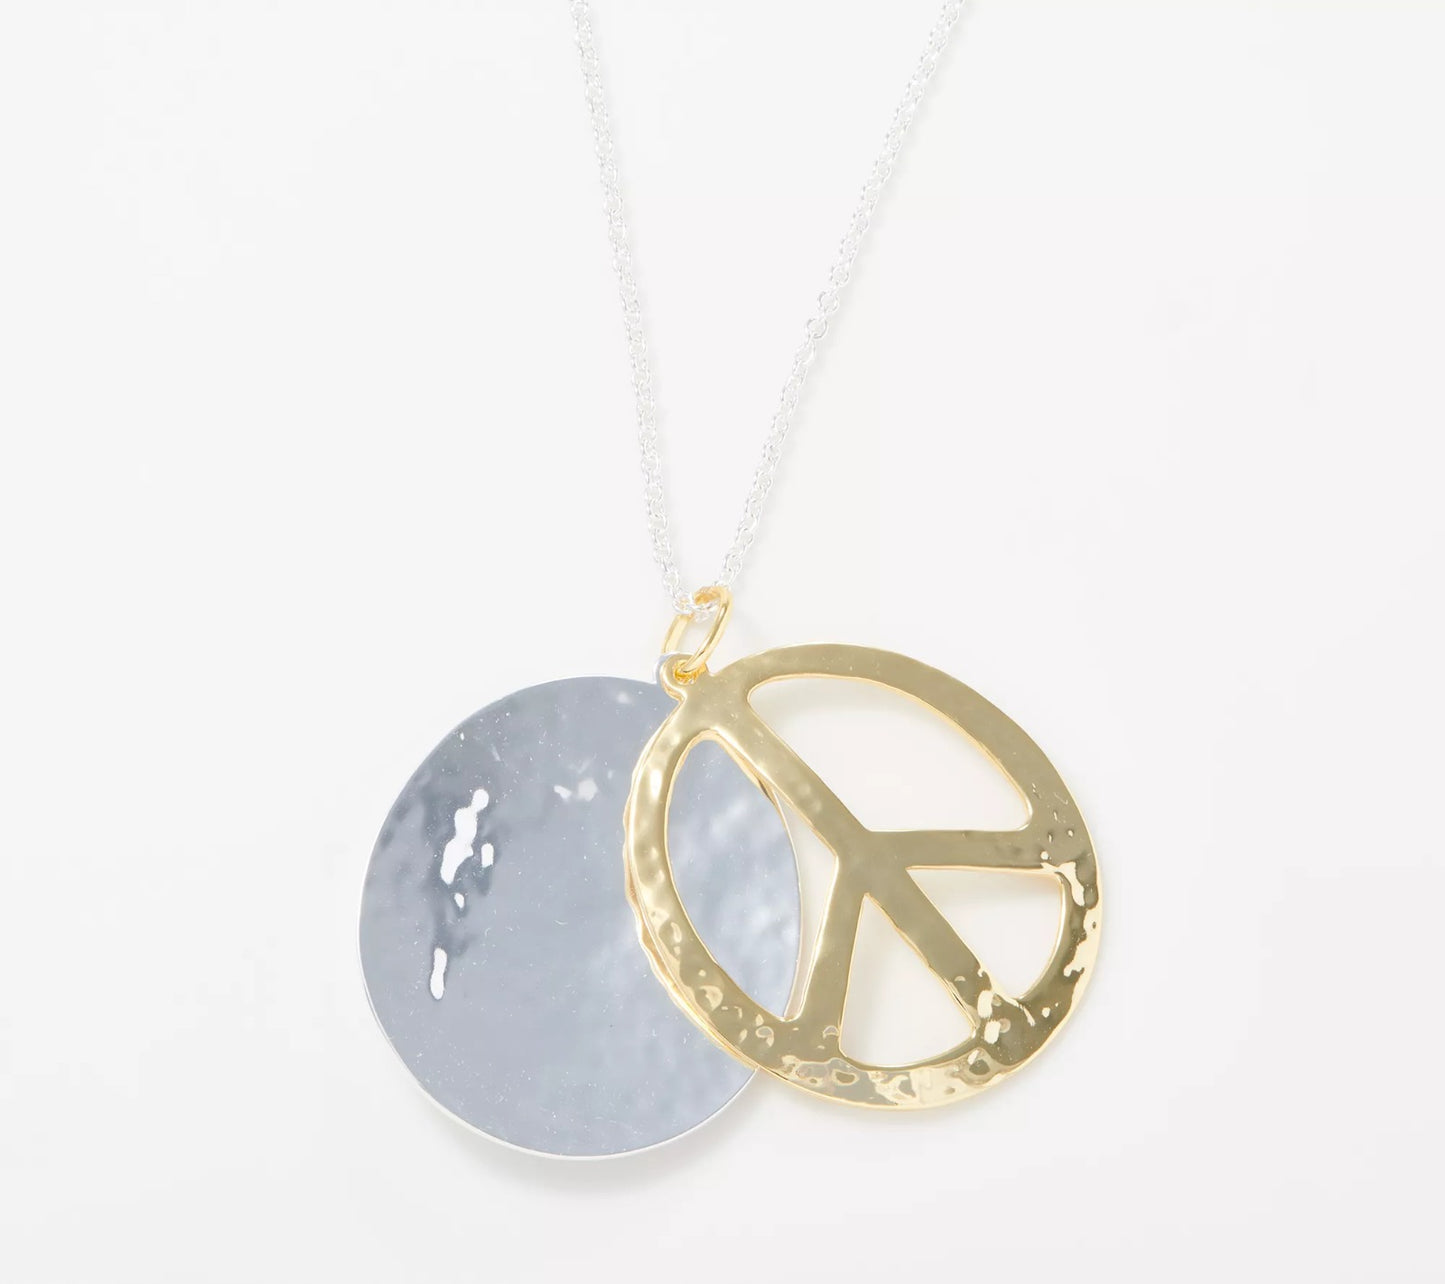 RLM Bronze Peace Sign Iconic Symbol Pendant Necklace, Gold Tone, Size 29.5"